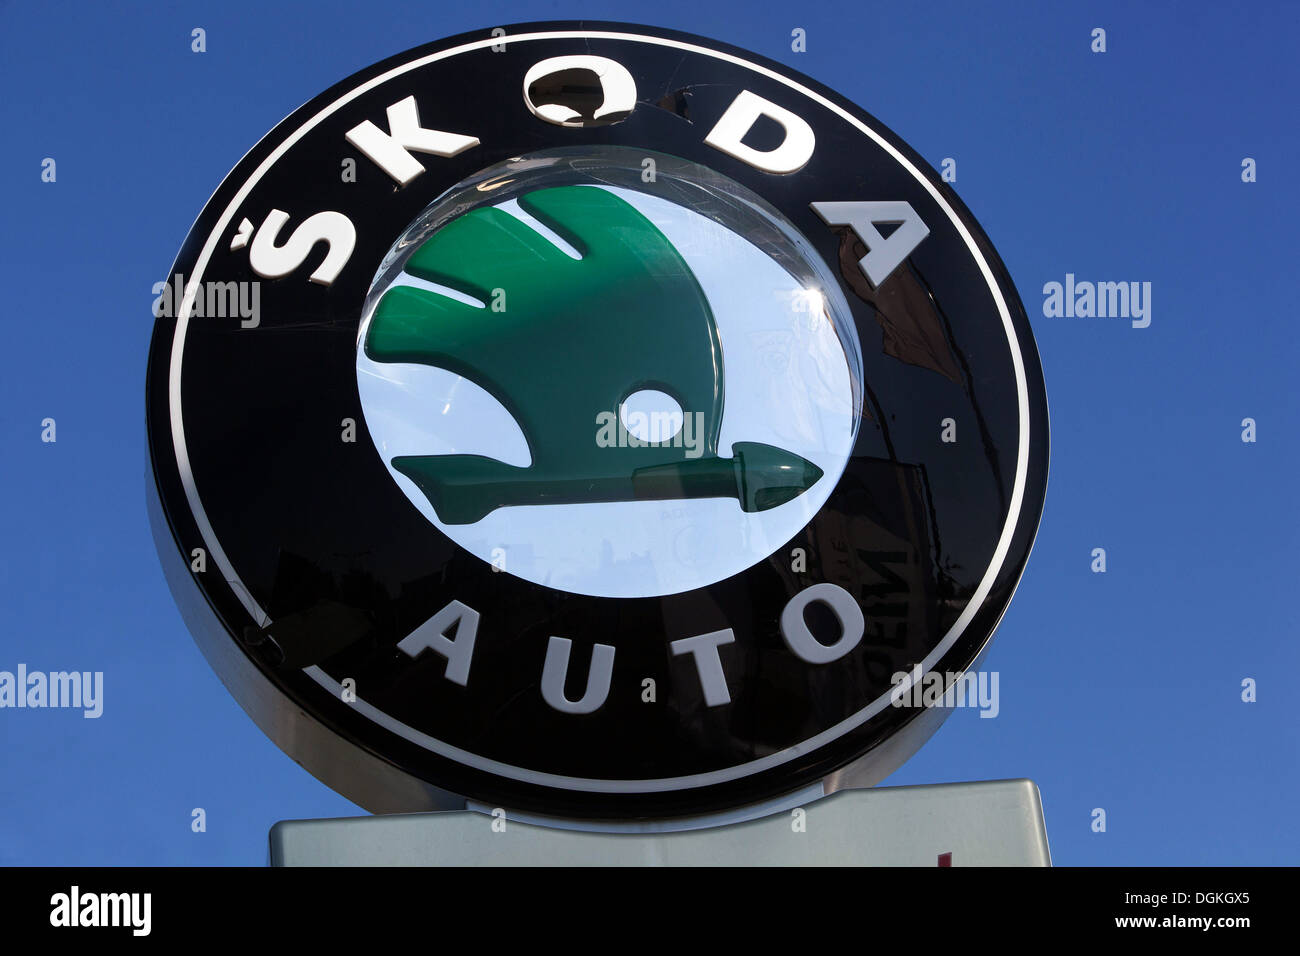 Skoda Auto advertisement advertising banner billboard brand Stock Photo